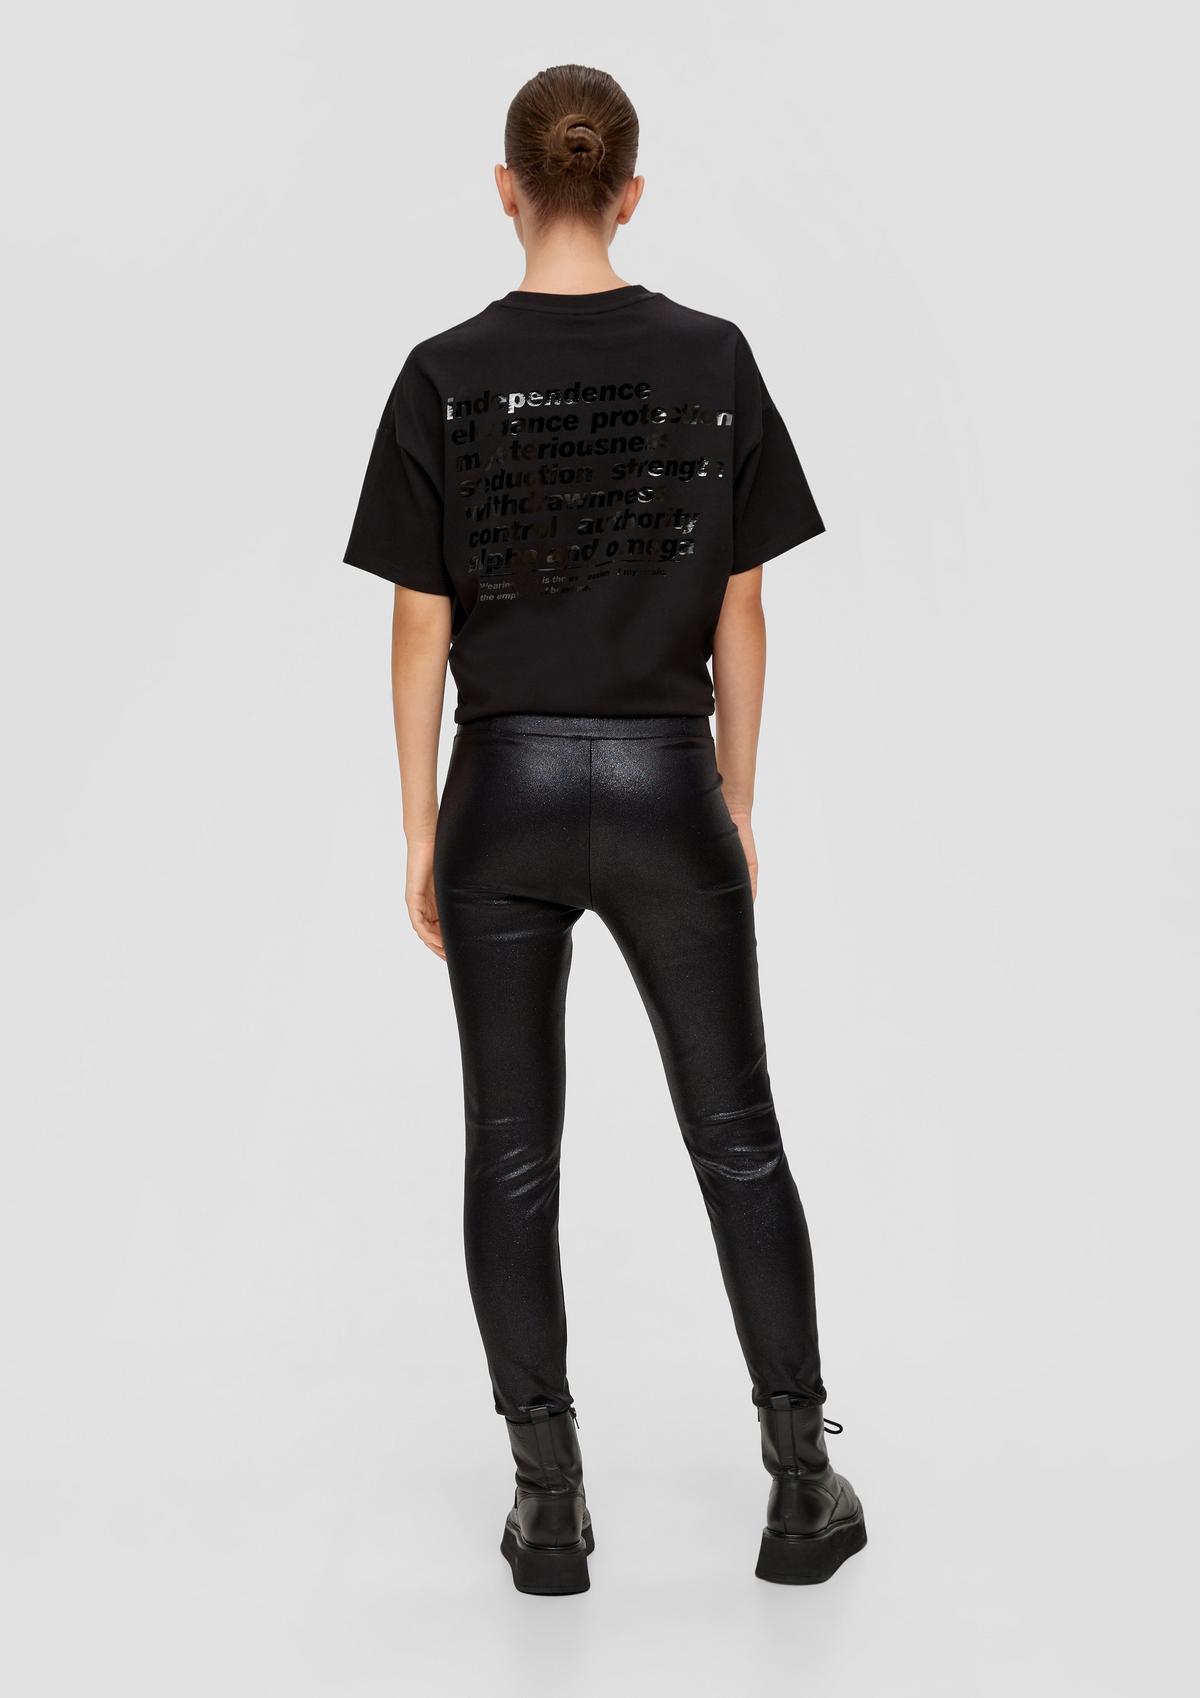 Slim fit: leggings in a design x - black QS | glittery Elif